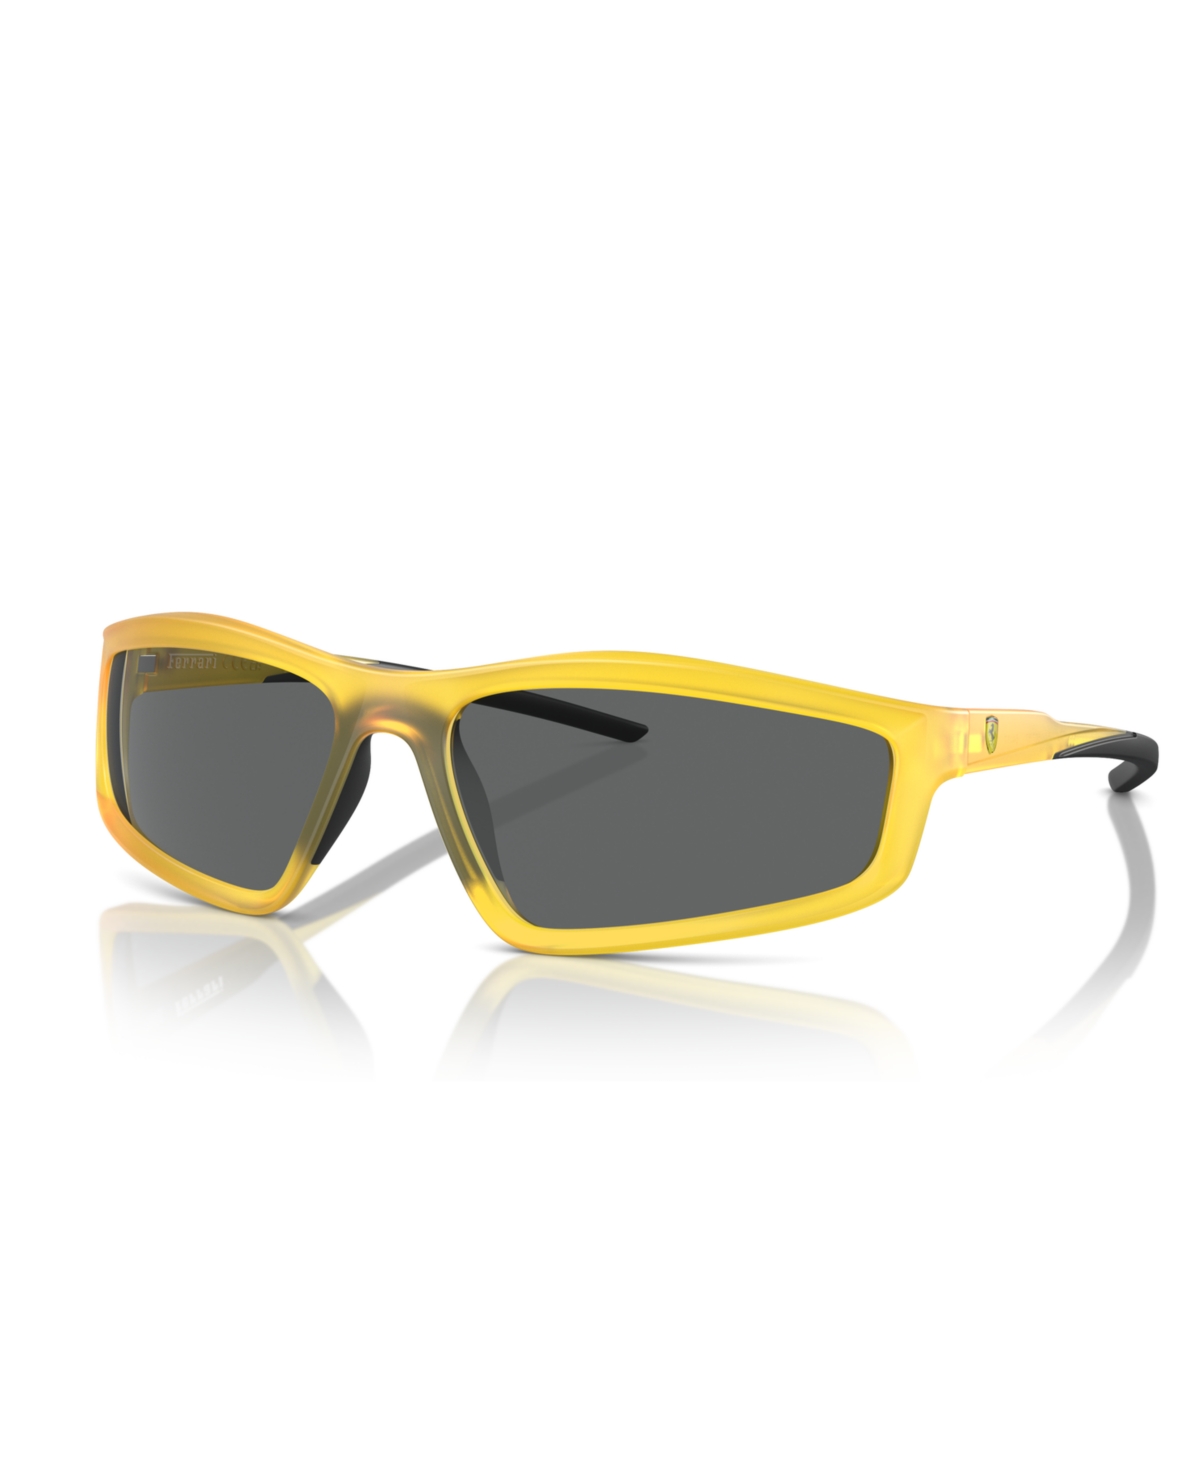 Scuderia Ferrari Men's Sunglasses, FZ6007U - Yellow Opal Matte